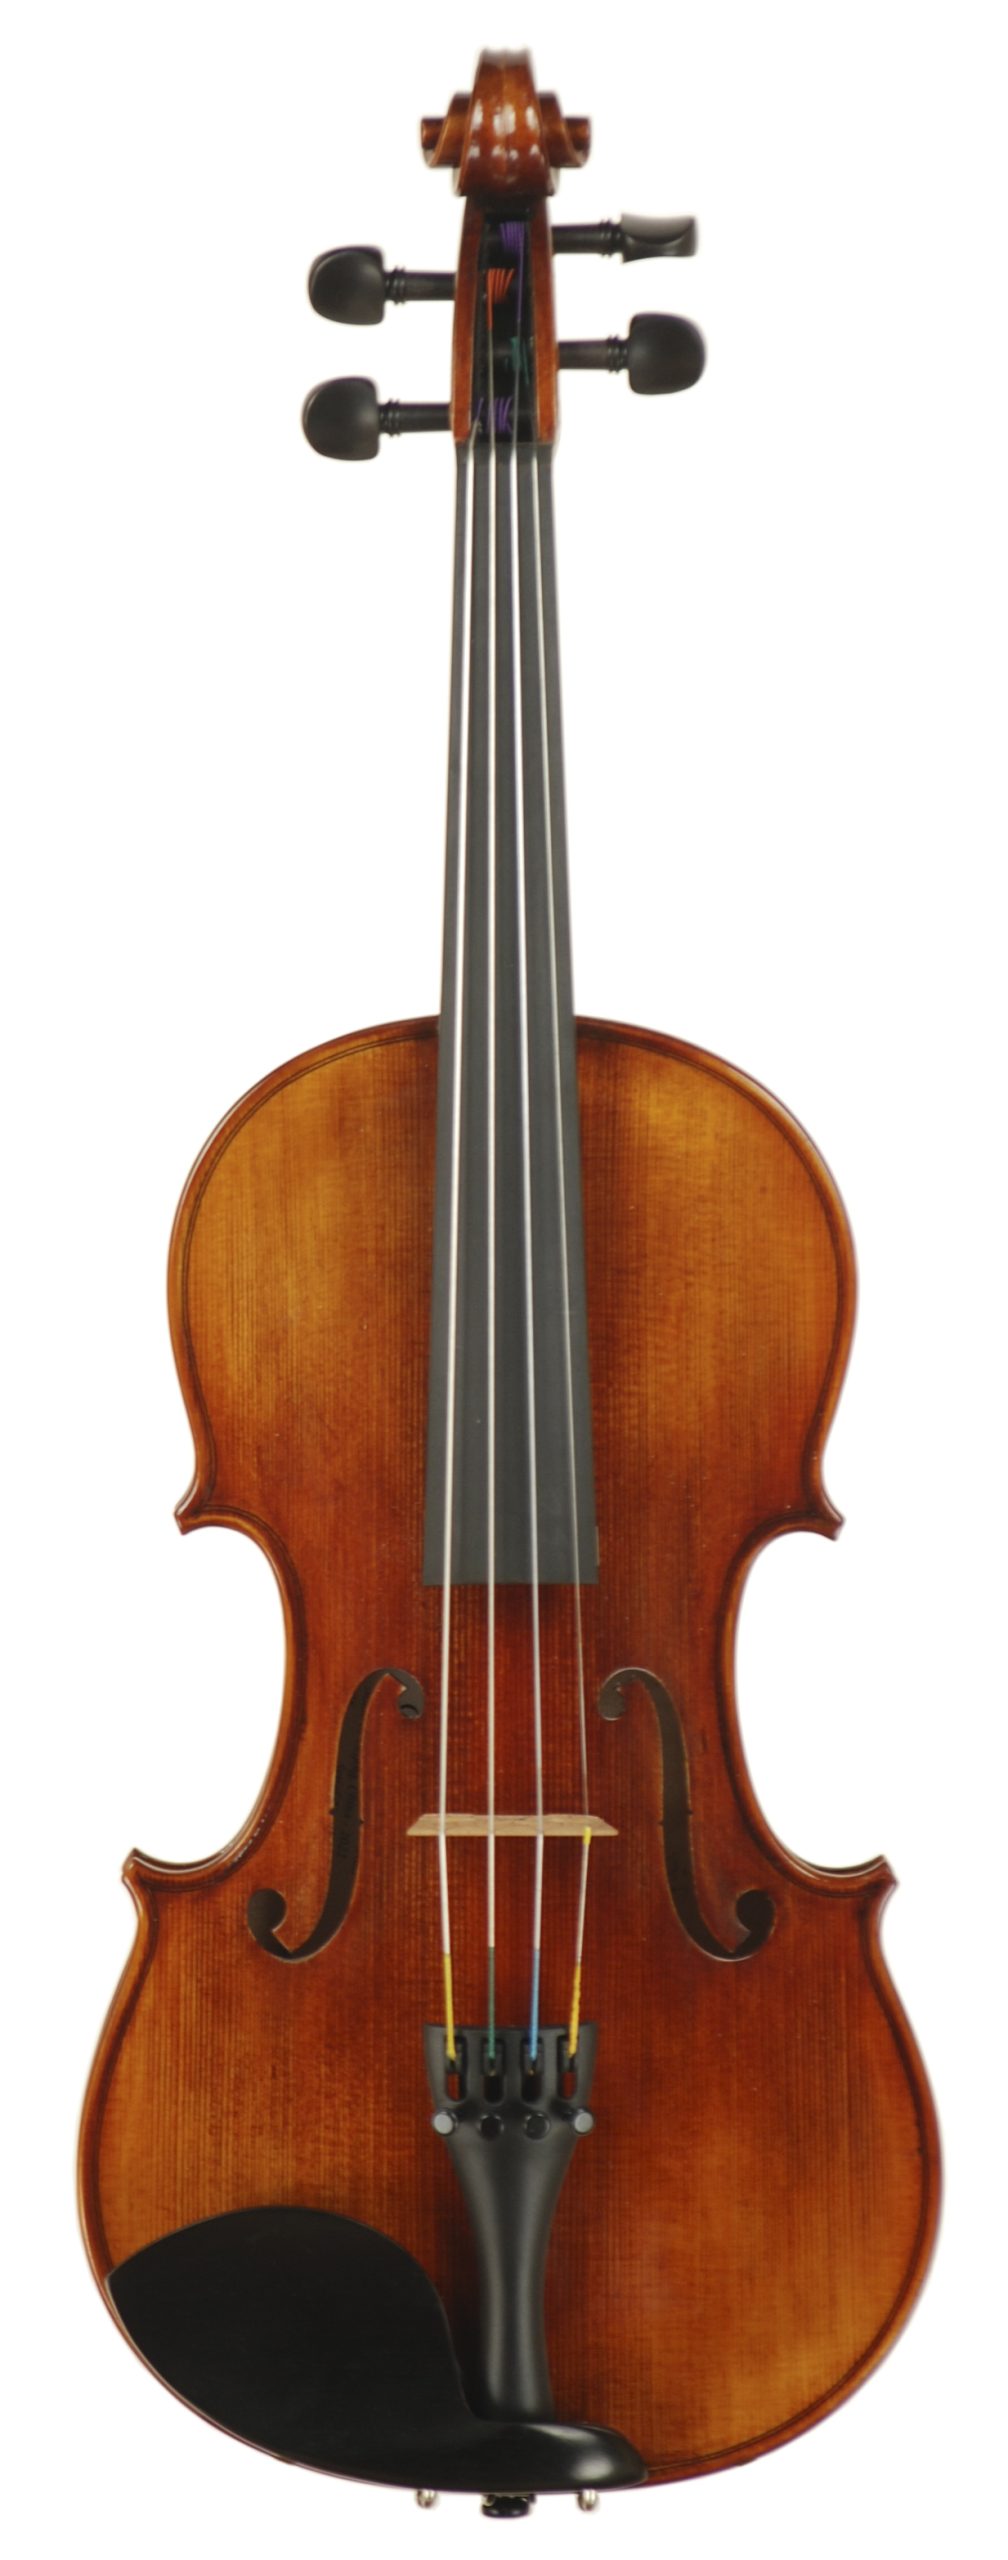 Carolina Series Violin - SOLD APRIL 22, 2023